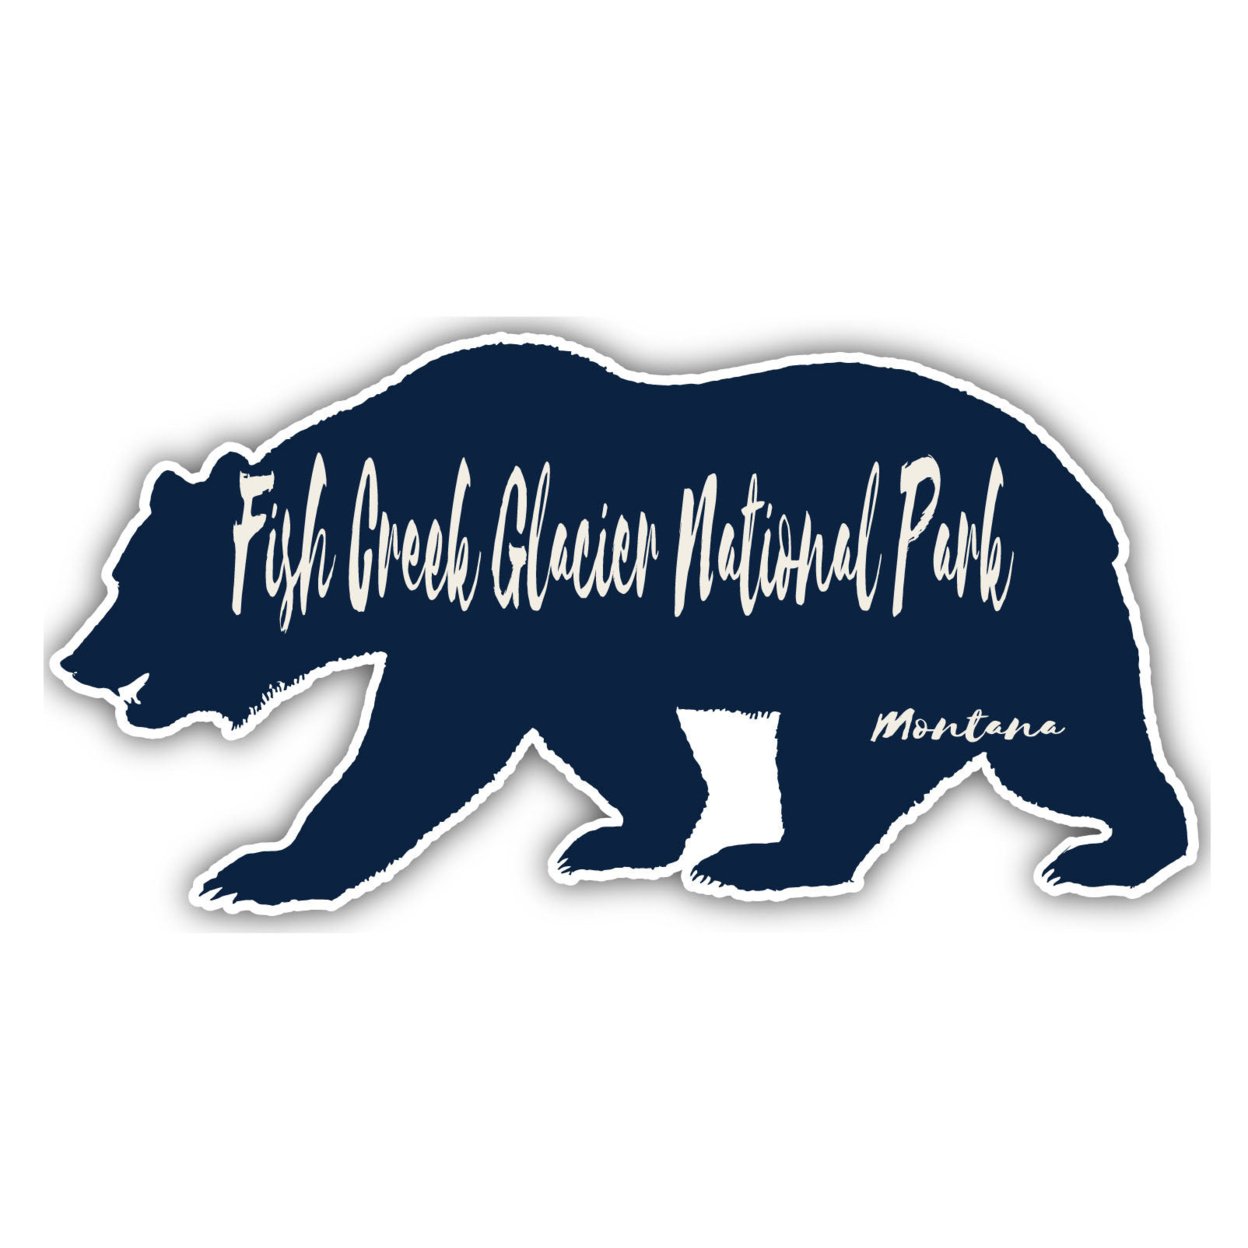 Fish Creek Glacier National Park Montana Souvenir Decorative Stickers (Choose Theme And Size) - Single Unit, 6-Inch, Bear